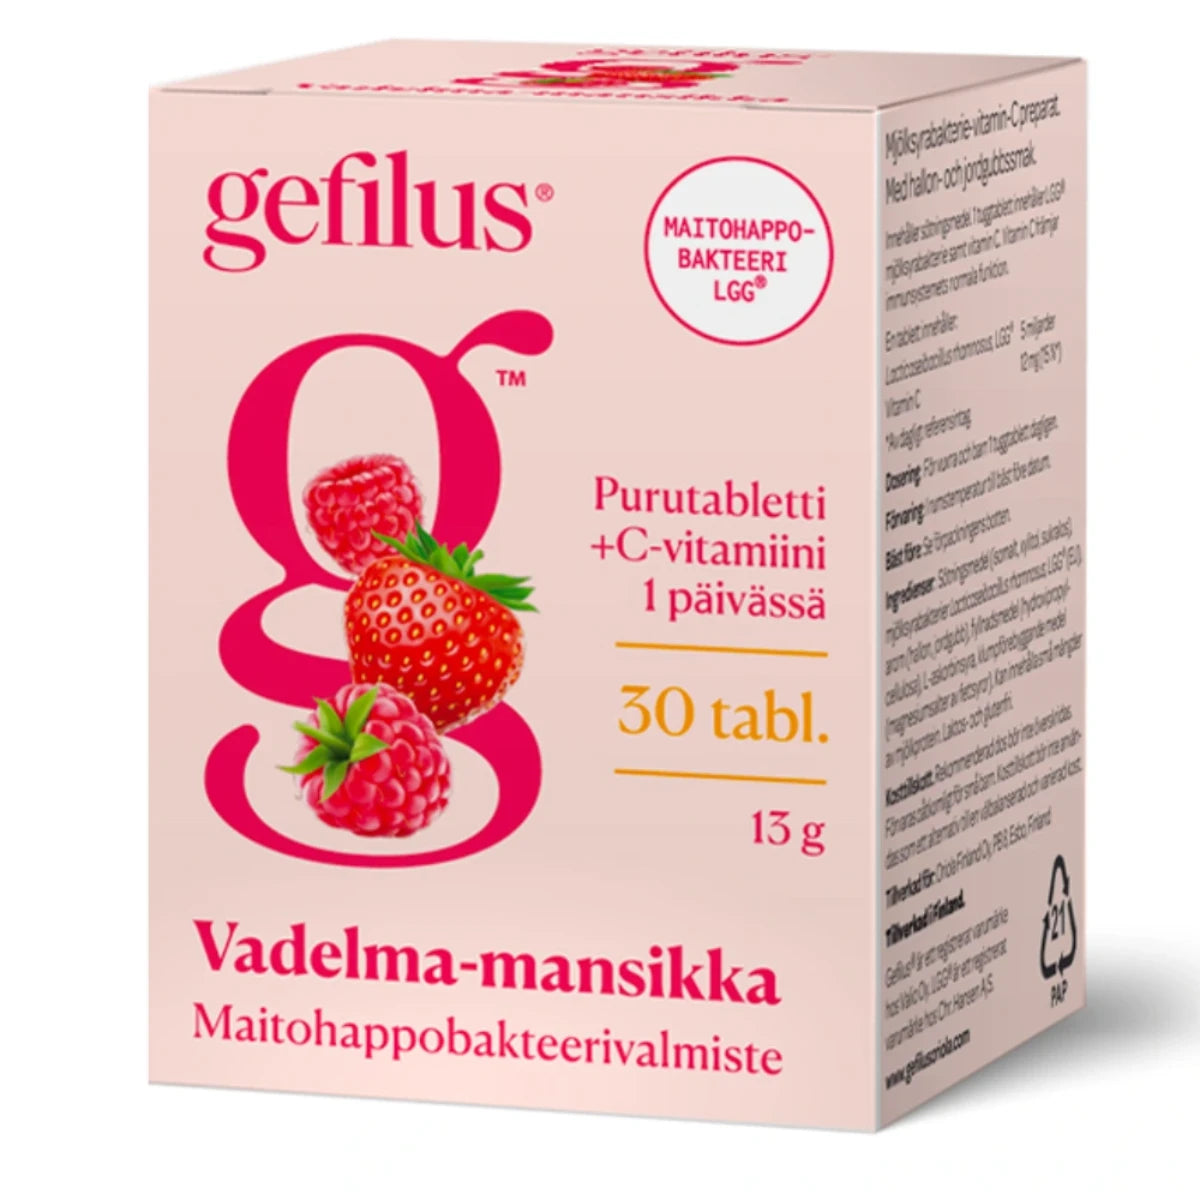 GEFILUS Vadelma-mansikka purutabletti 30 kpl maitohappobakteerivalmiste